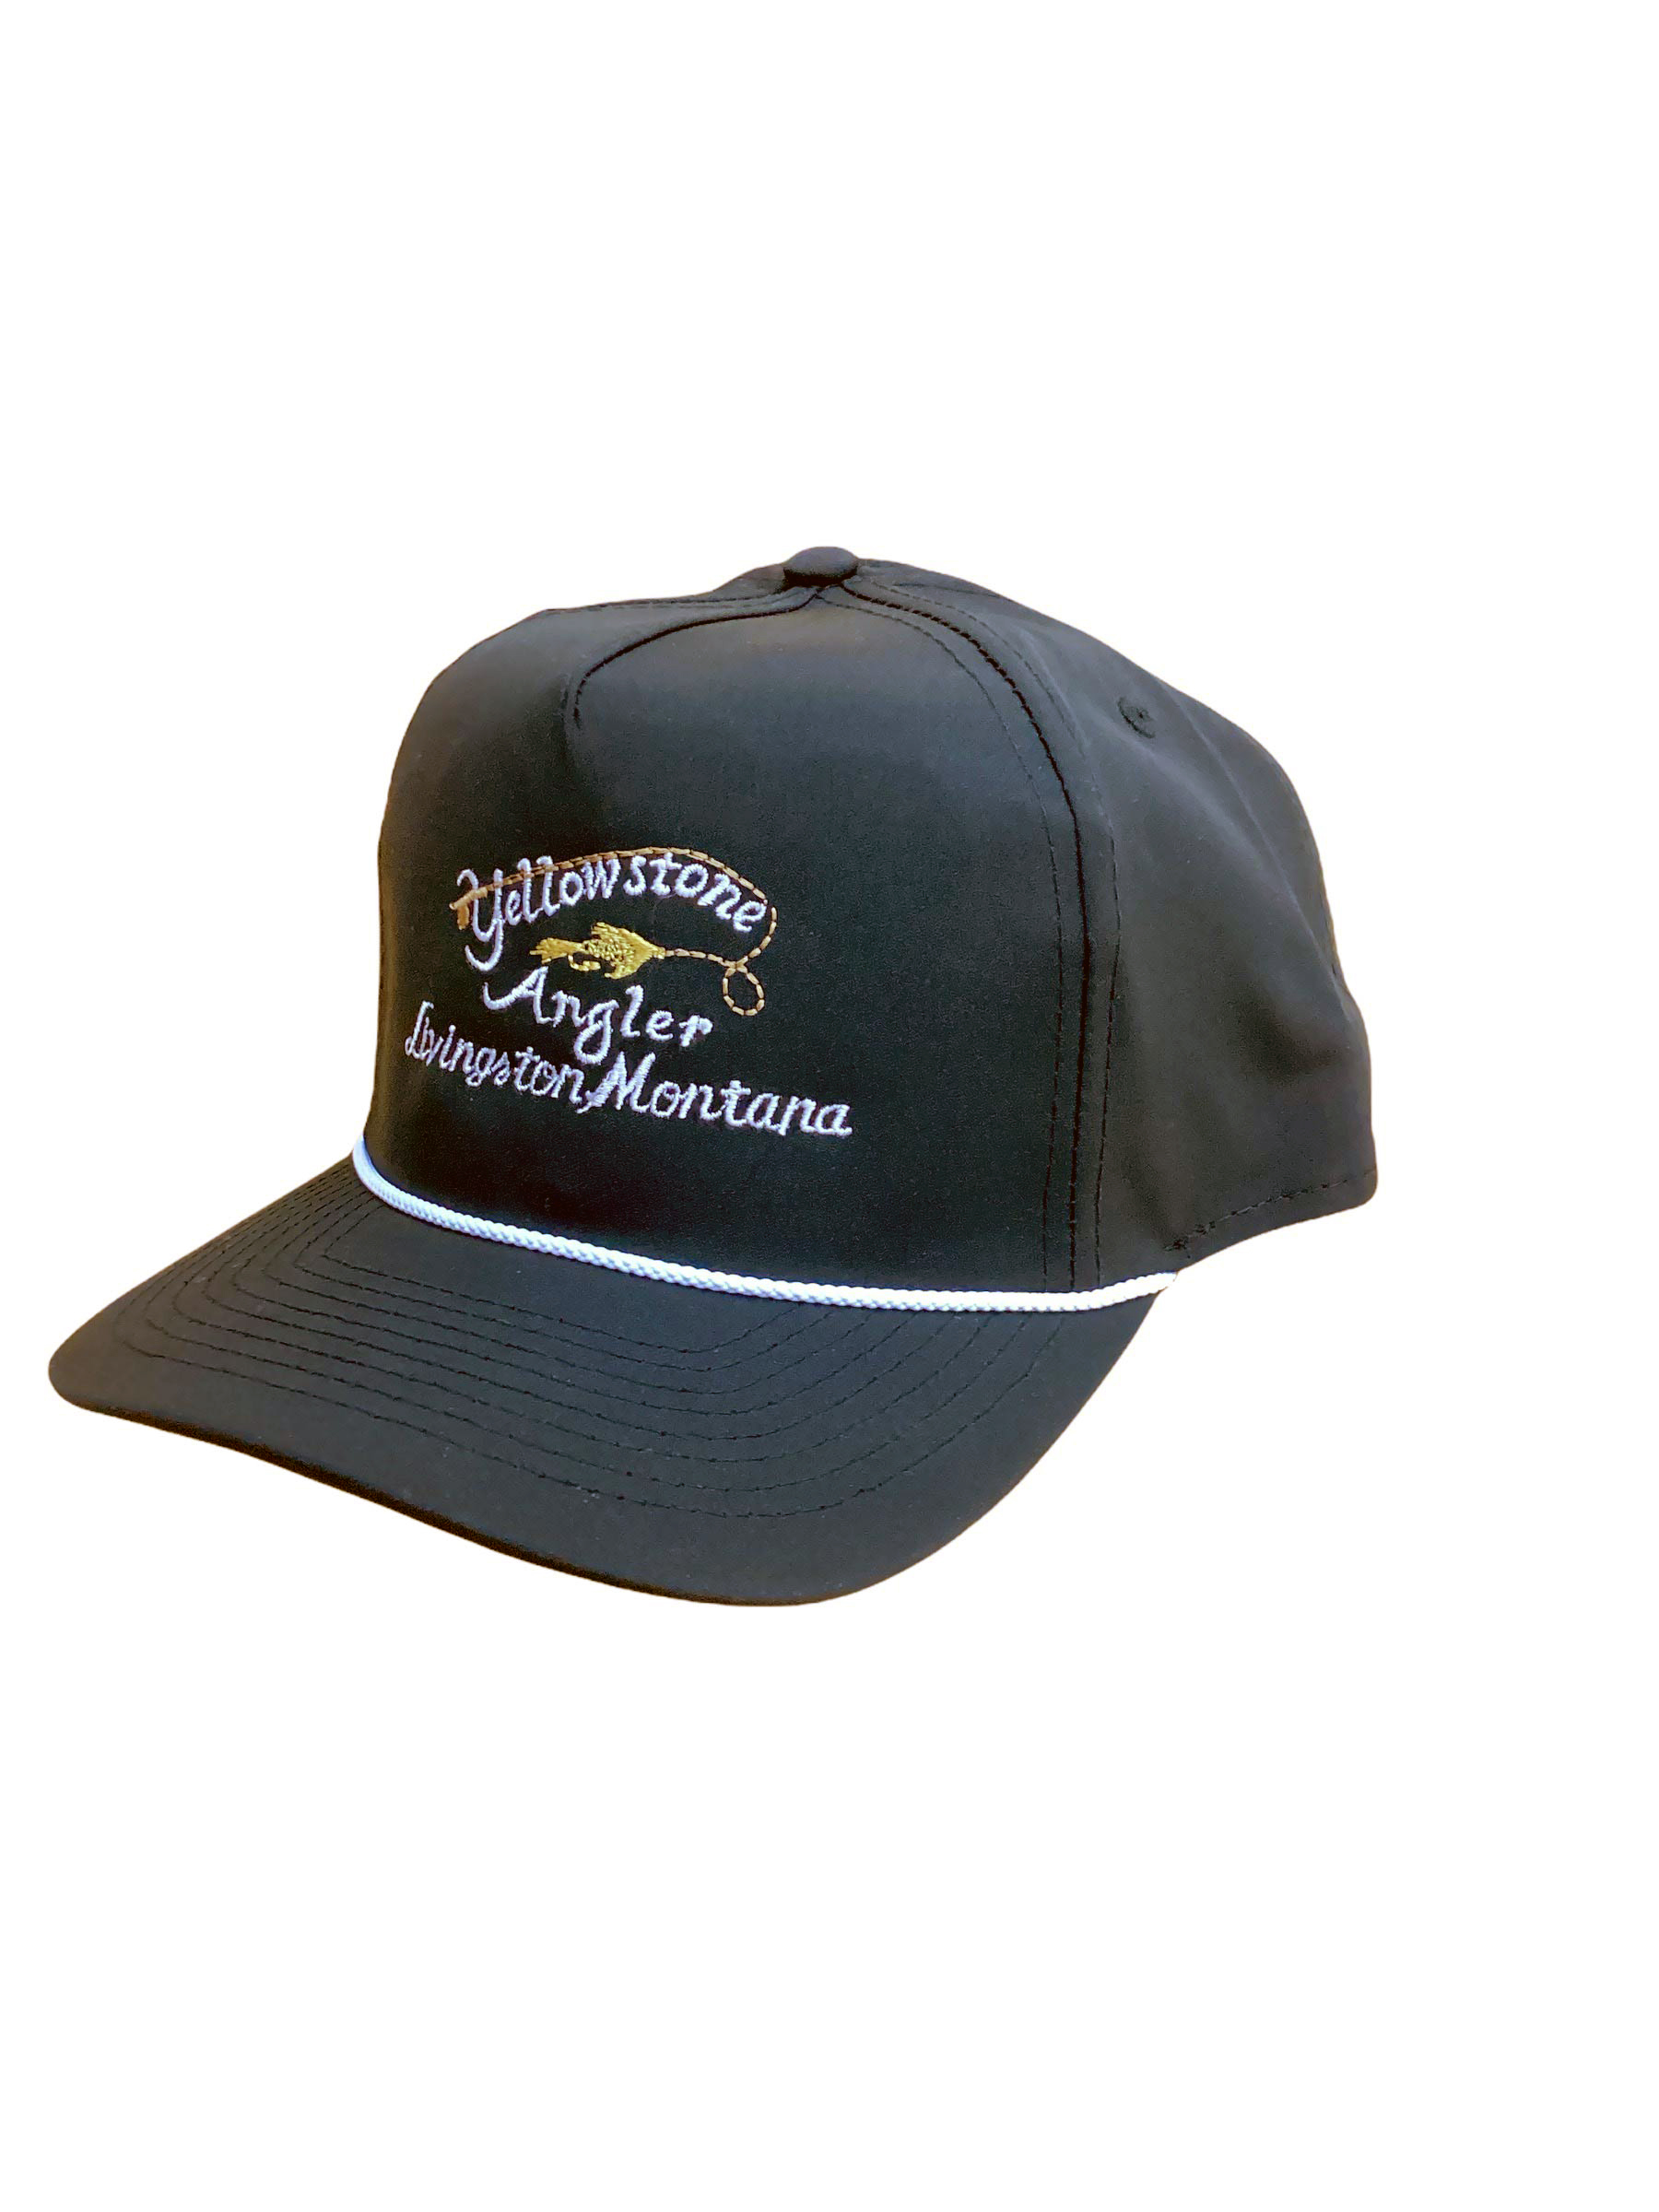 Yellowstone Angler Original Logo Hat